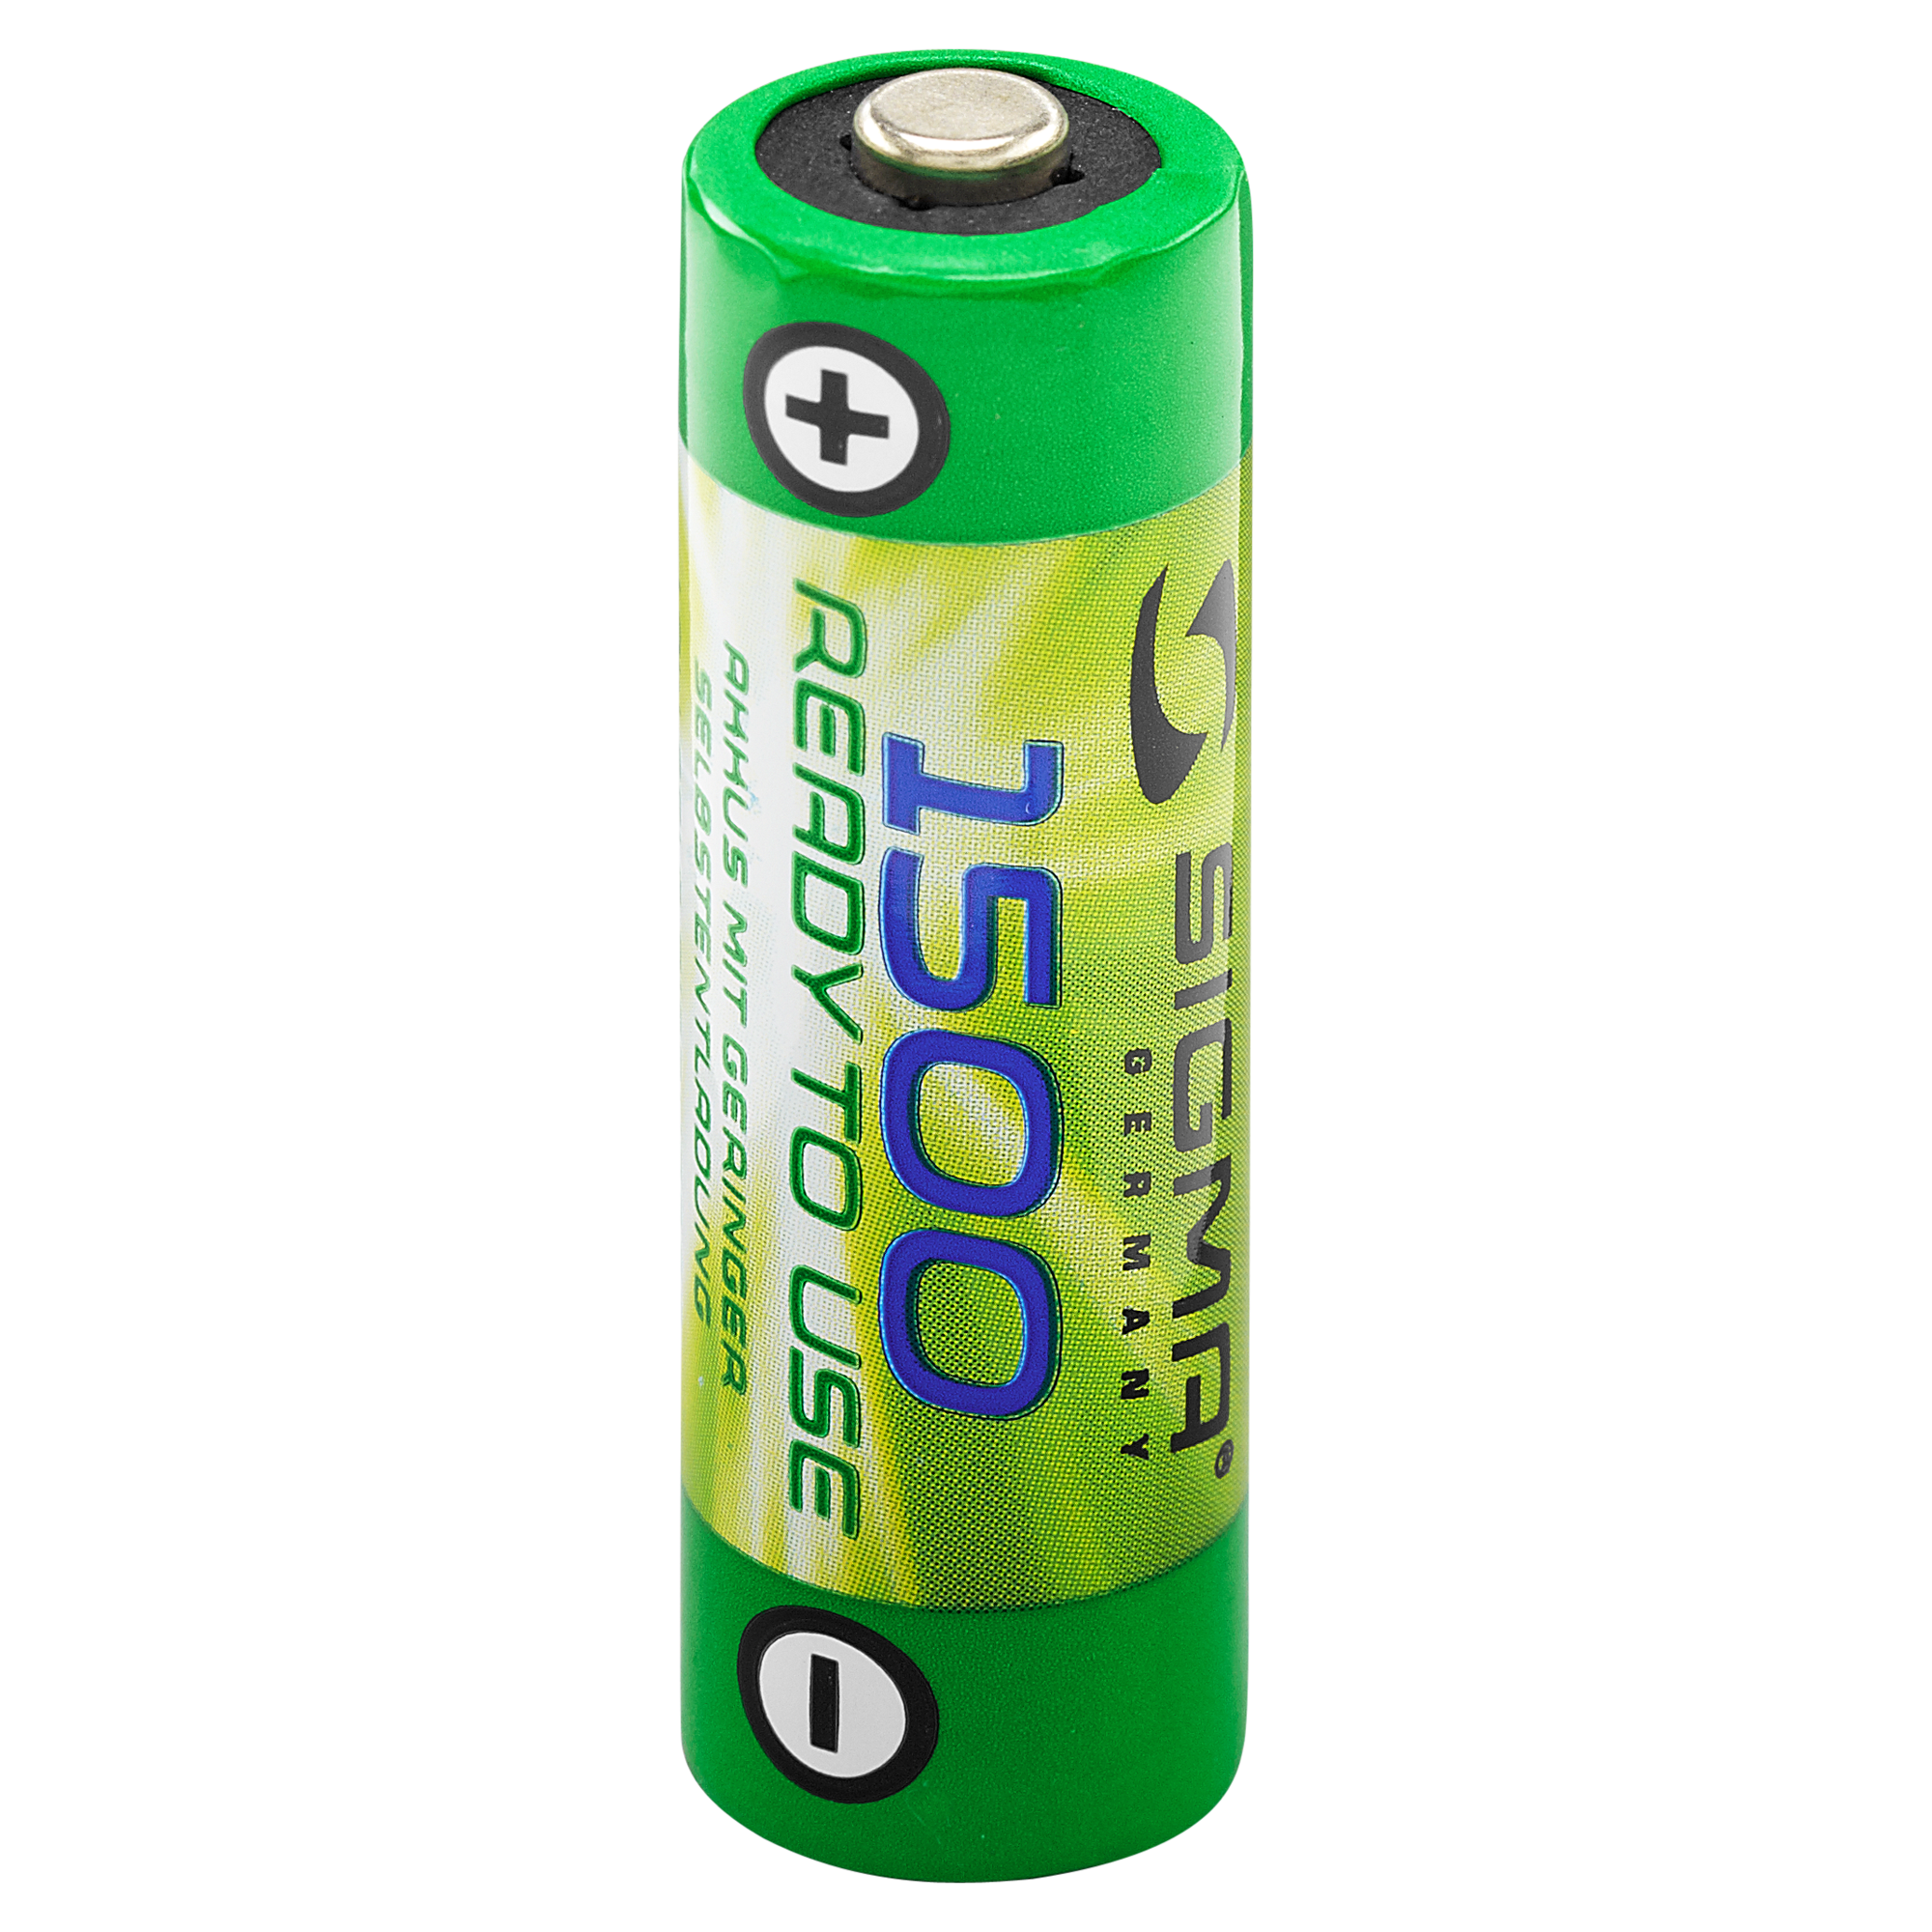 Batterieset 2 Stück + product picture